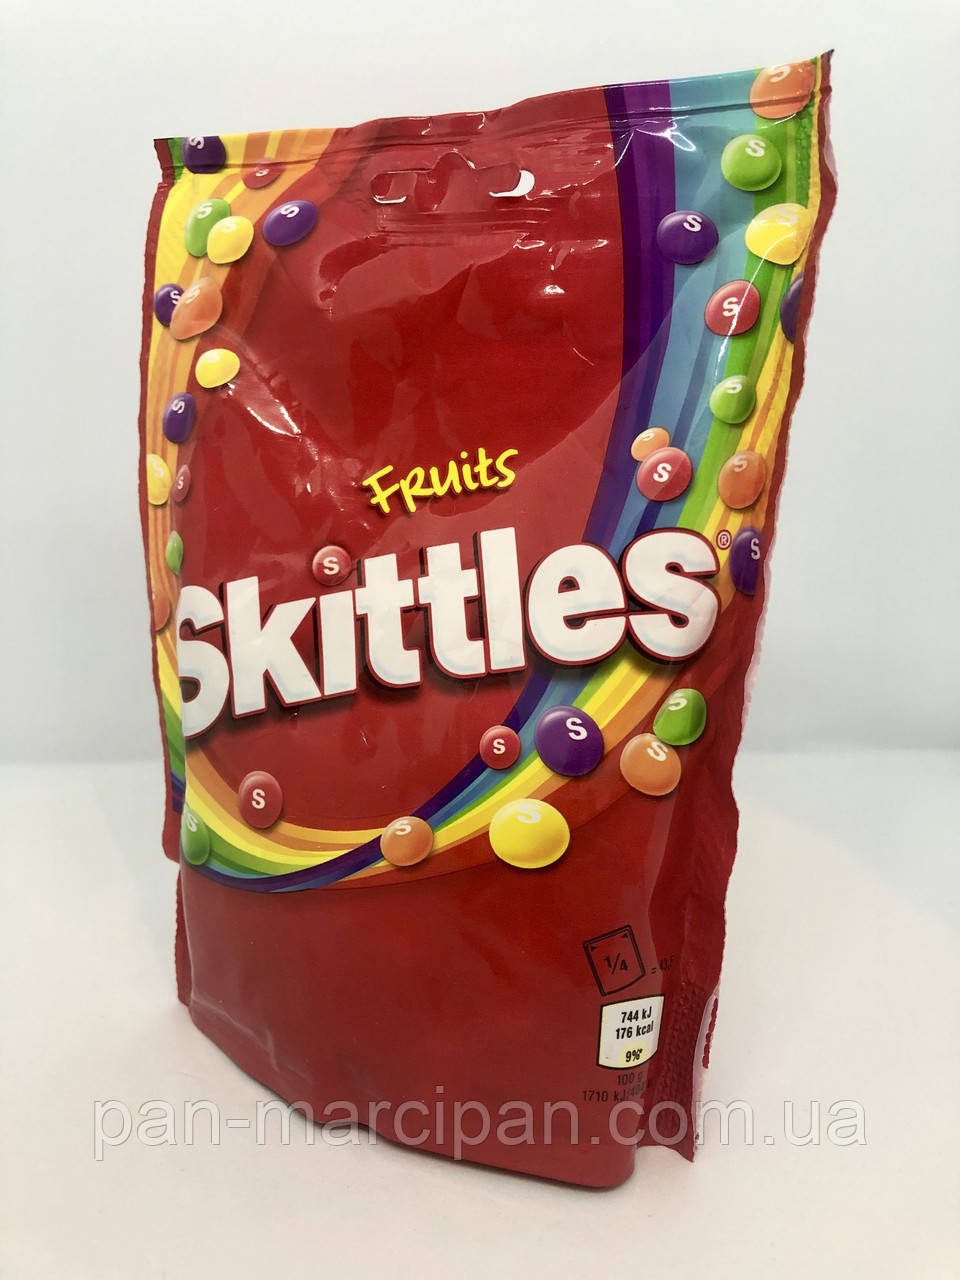 Драже Skittles Fruits 174г